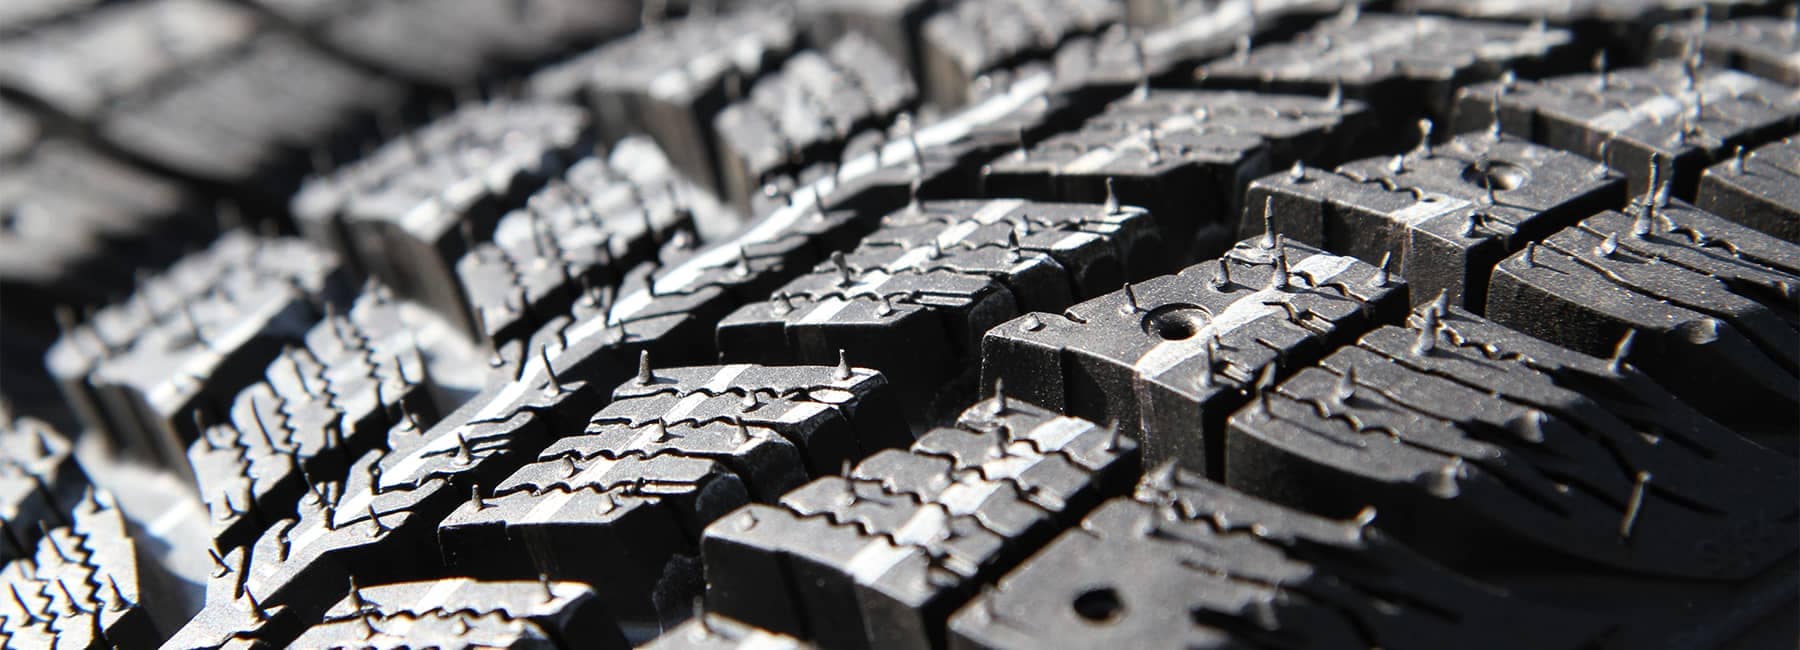 Tire Treads Close Up